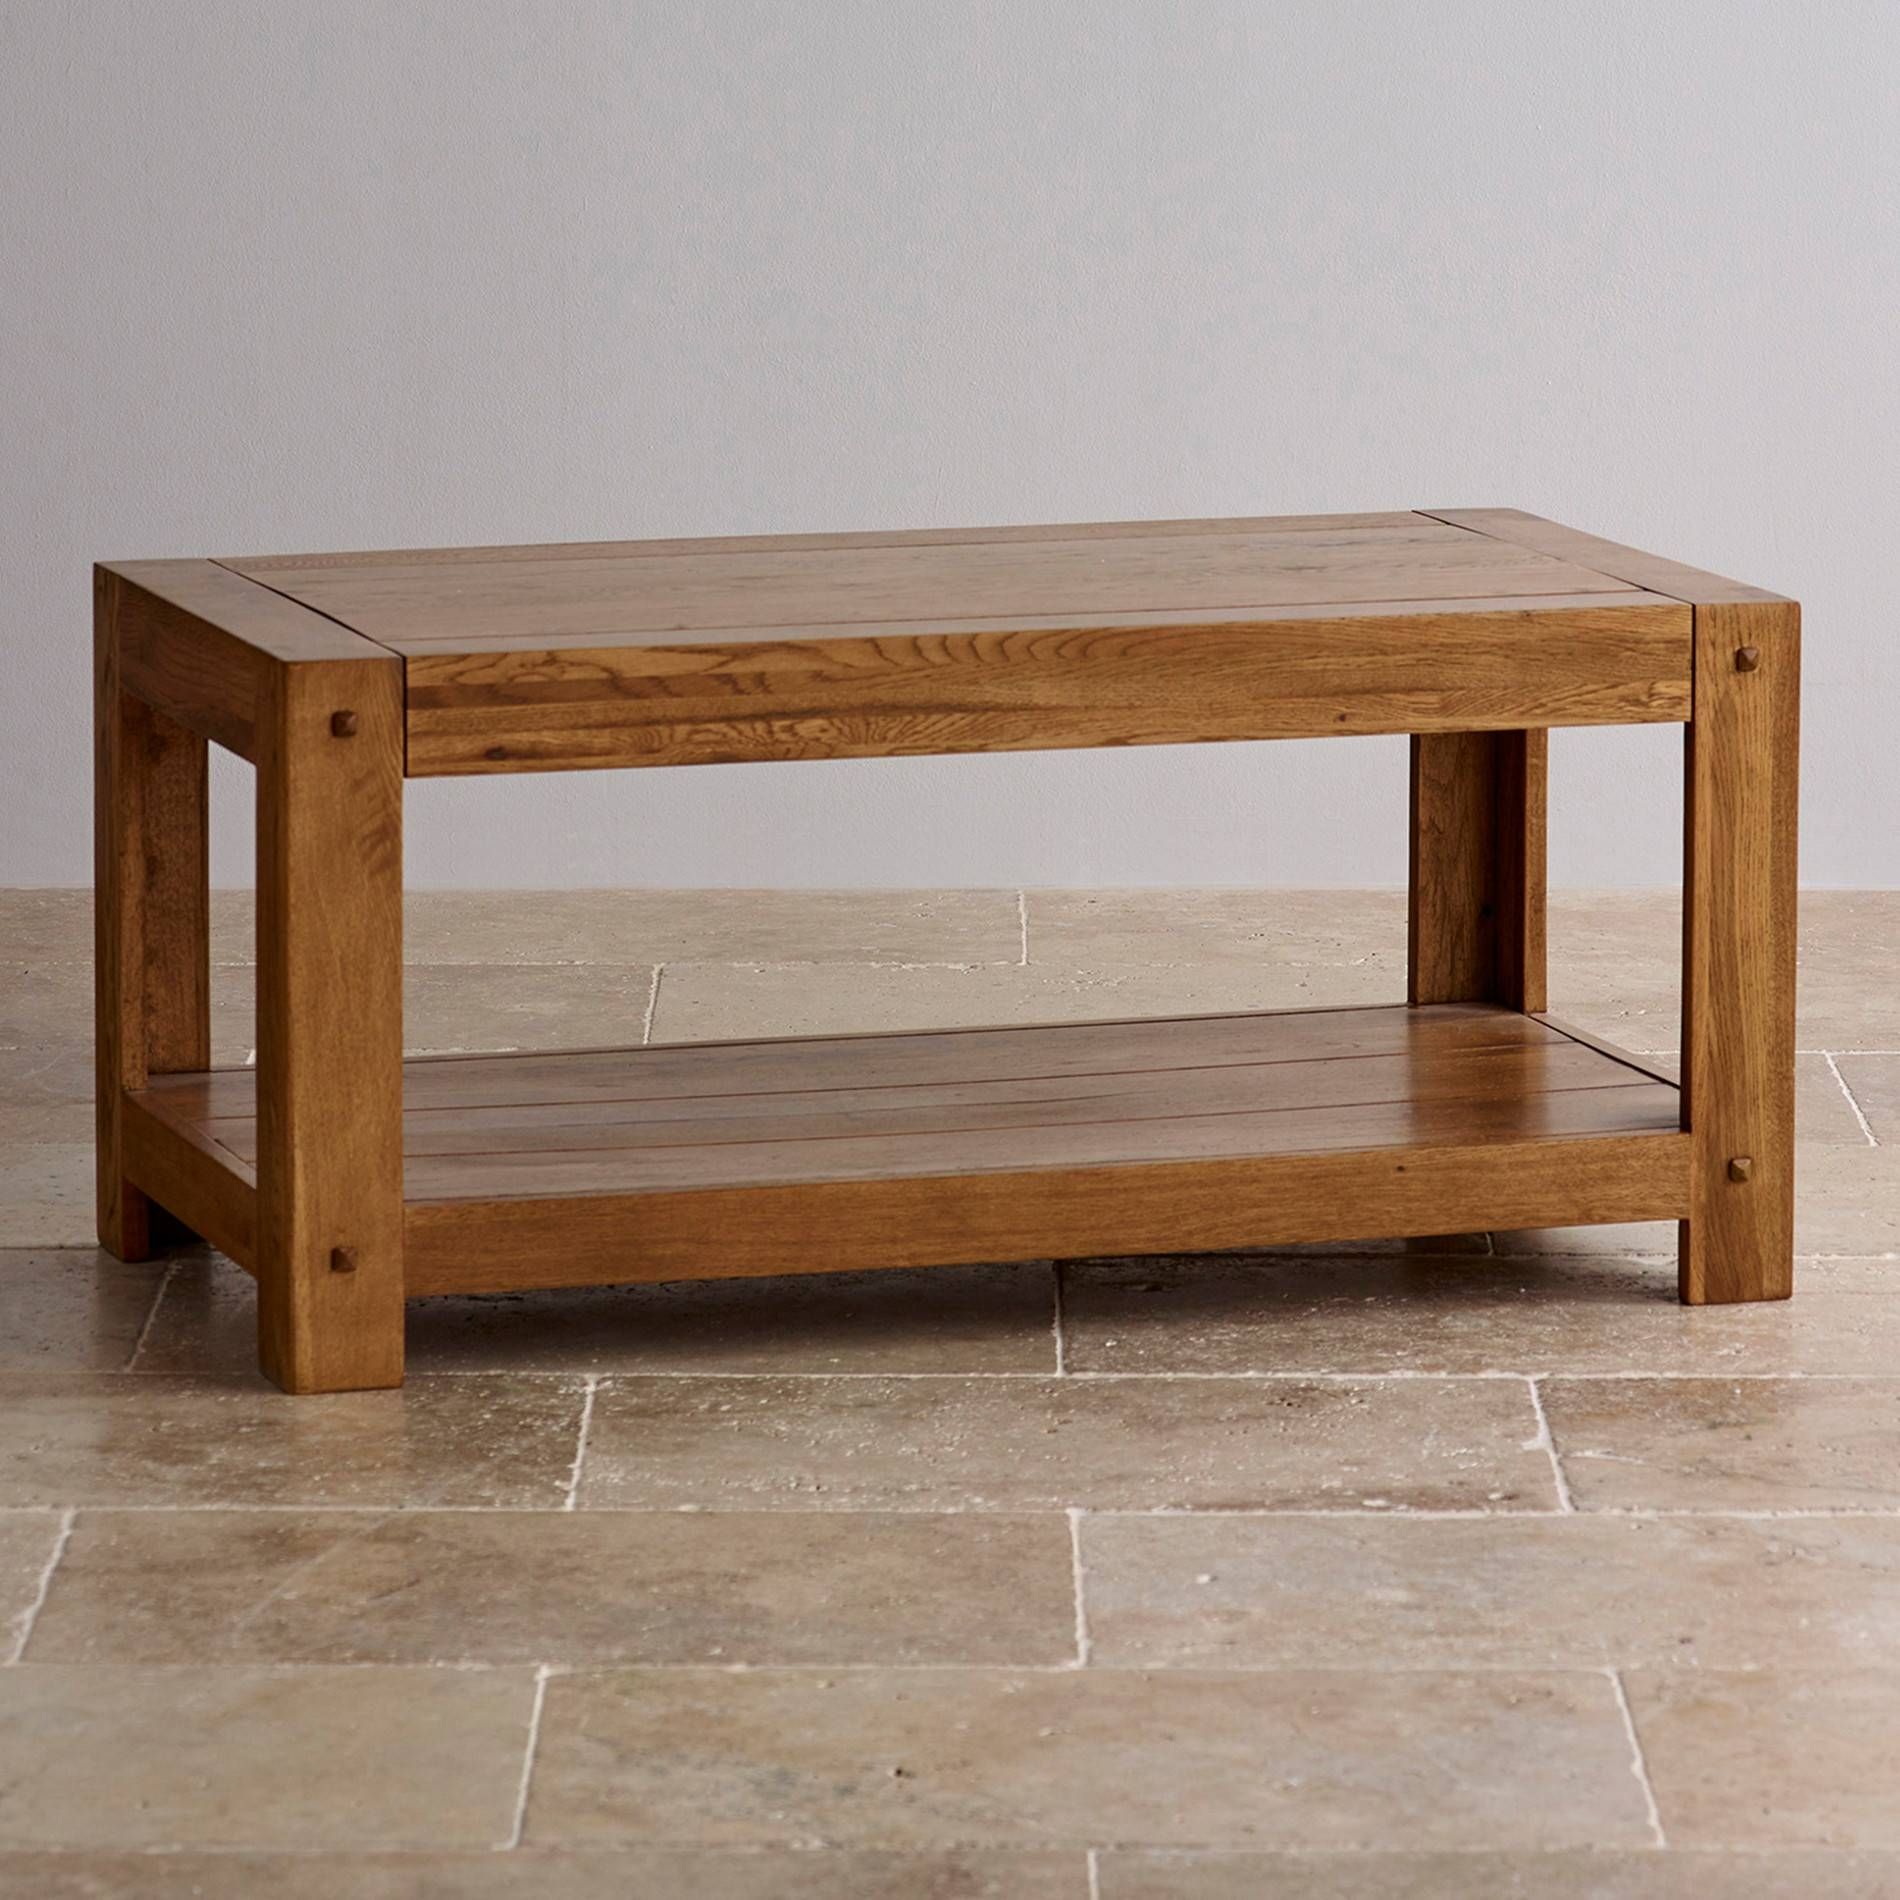 Quercus Coffee Table In Rustic Solid Oak | Oak Furniture Land In Solid Oak Coffee Tables (View 1 of 15)